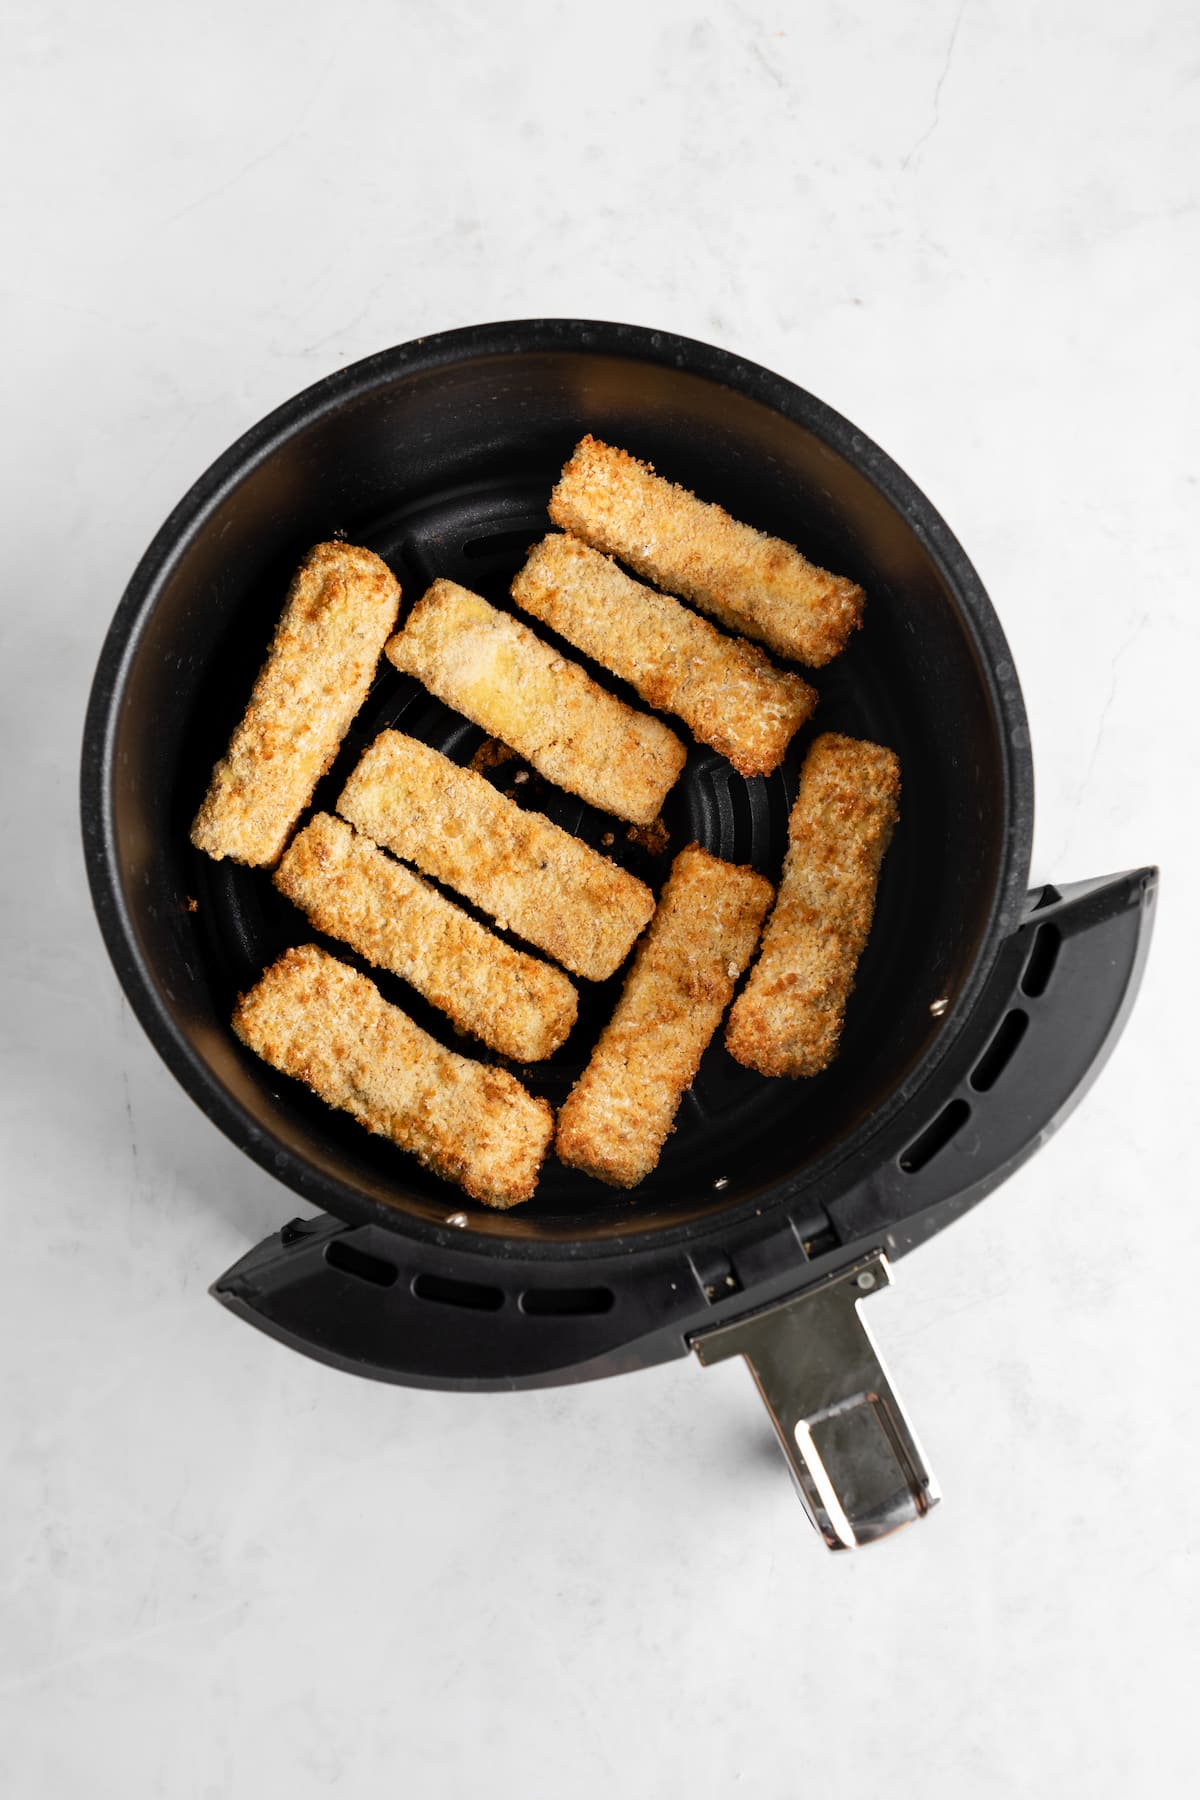 Golden tofu wings in an air fryer basket.